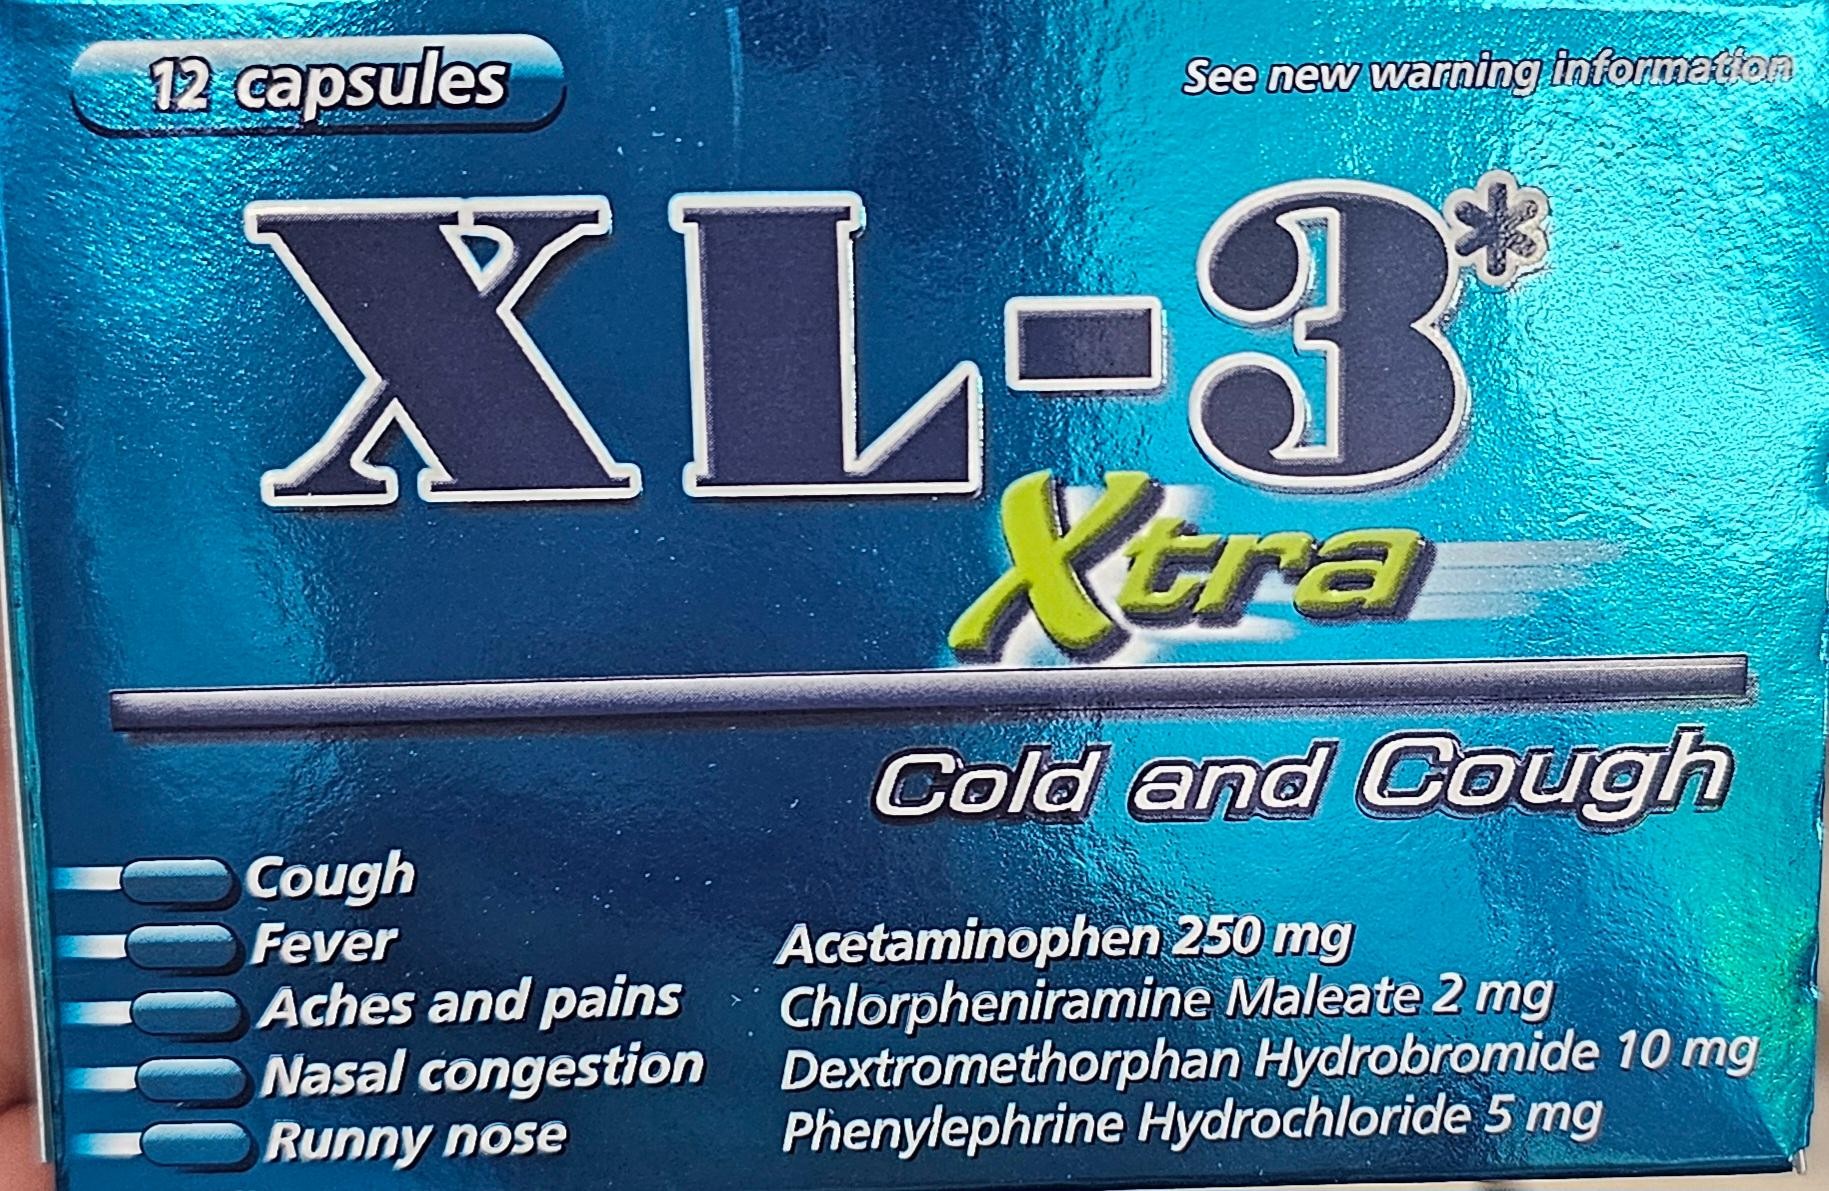 XL-3 Xtra BR